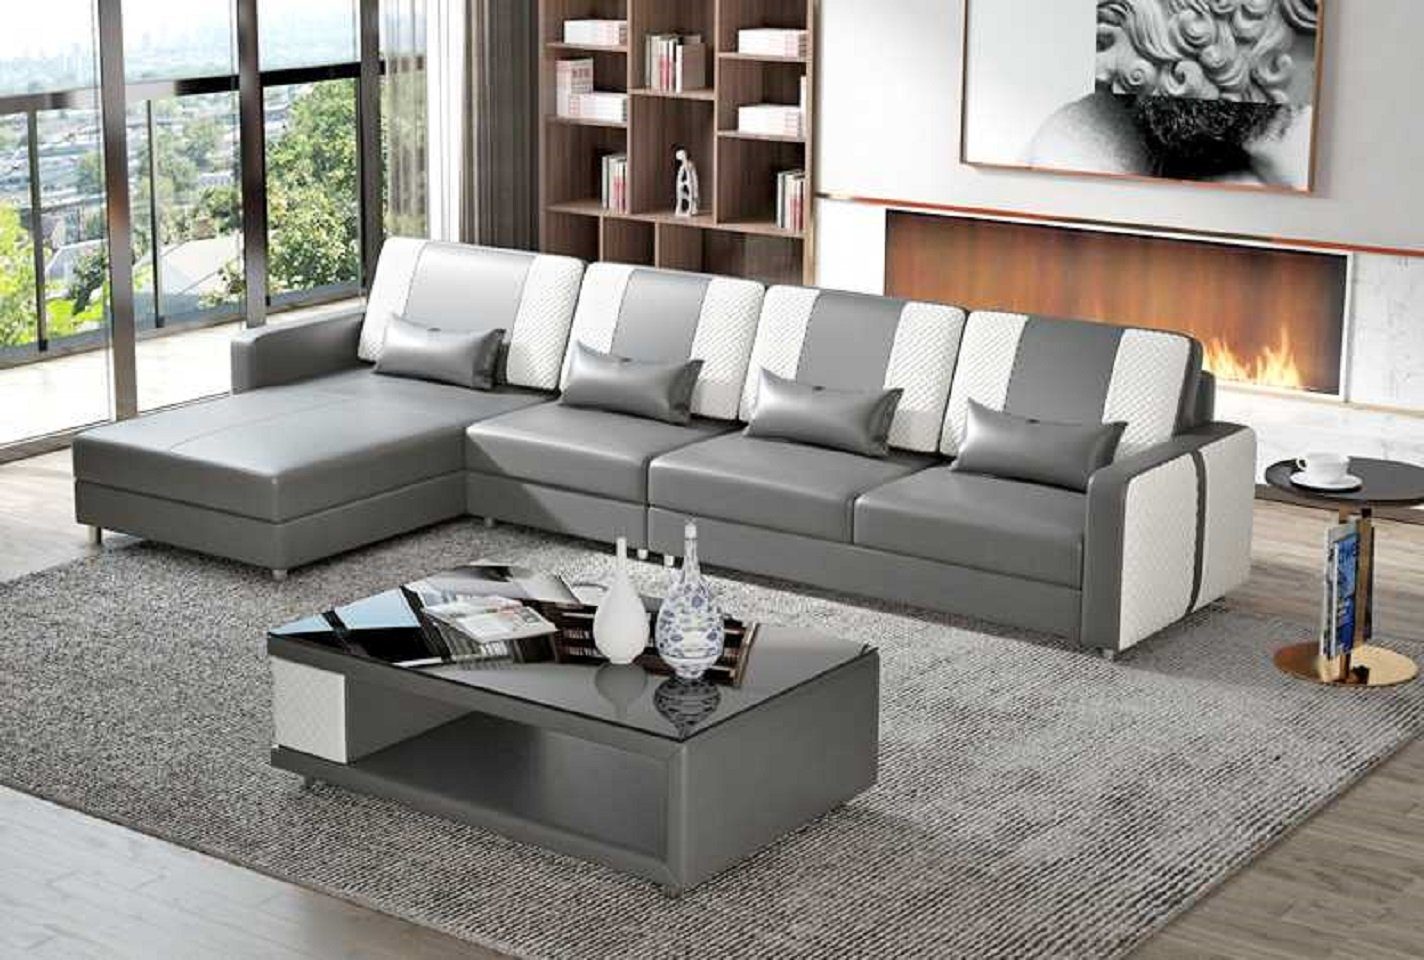 JVmoebel Ecksofa Modern Eckgarnitur Ecksofa Luxus Neu, in Form Europe Couch Teile, Sofa Grau Made 3 L Liege